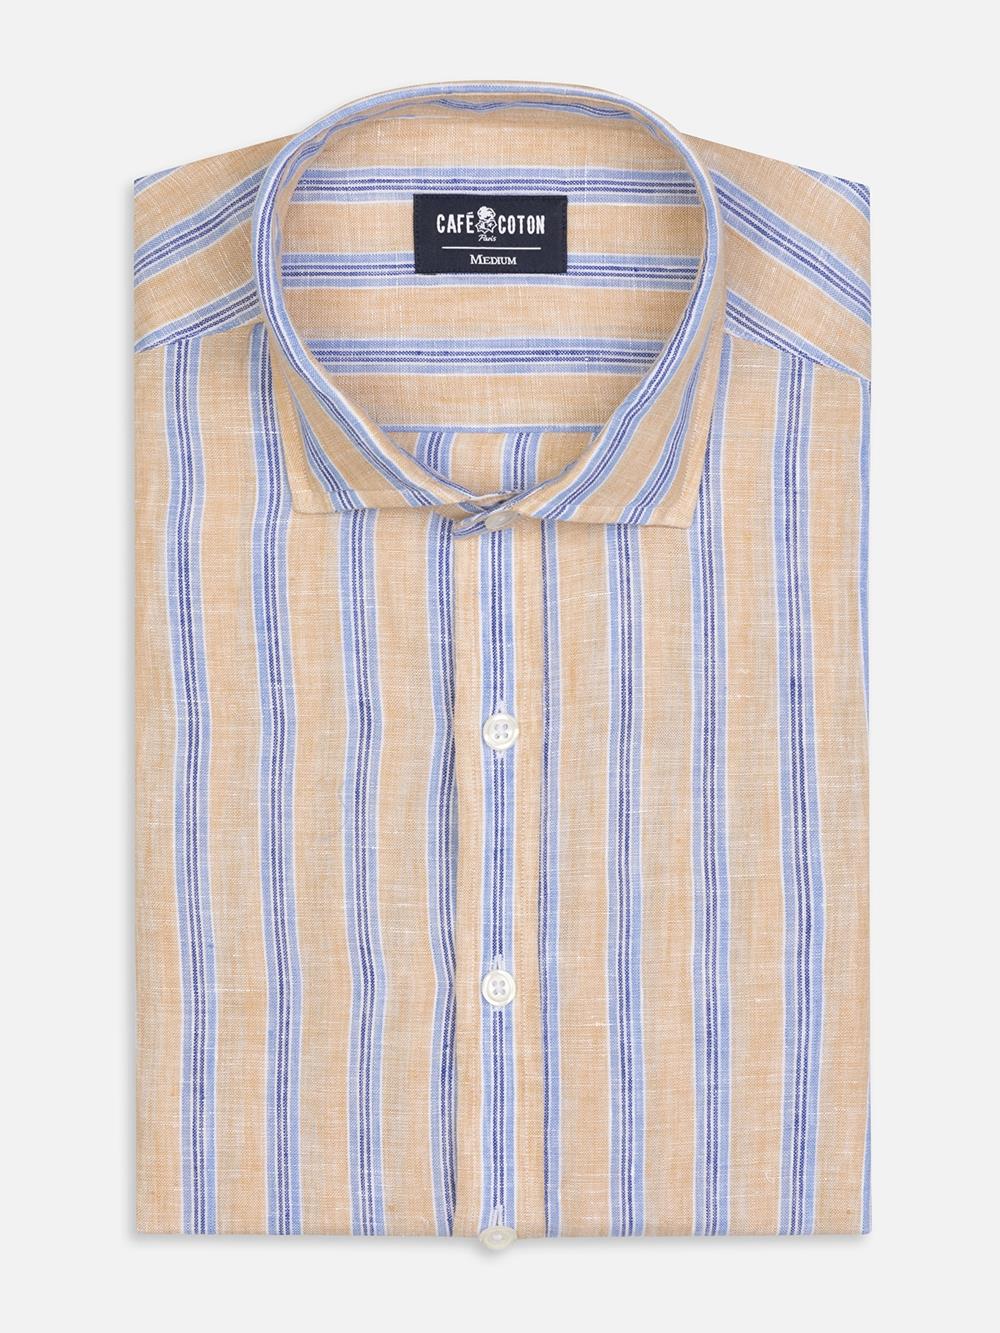 Ron sandy stripes linen shirt 